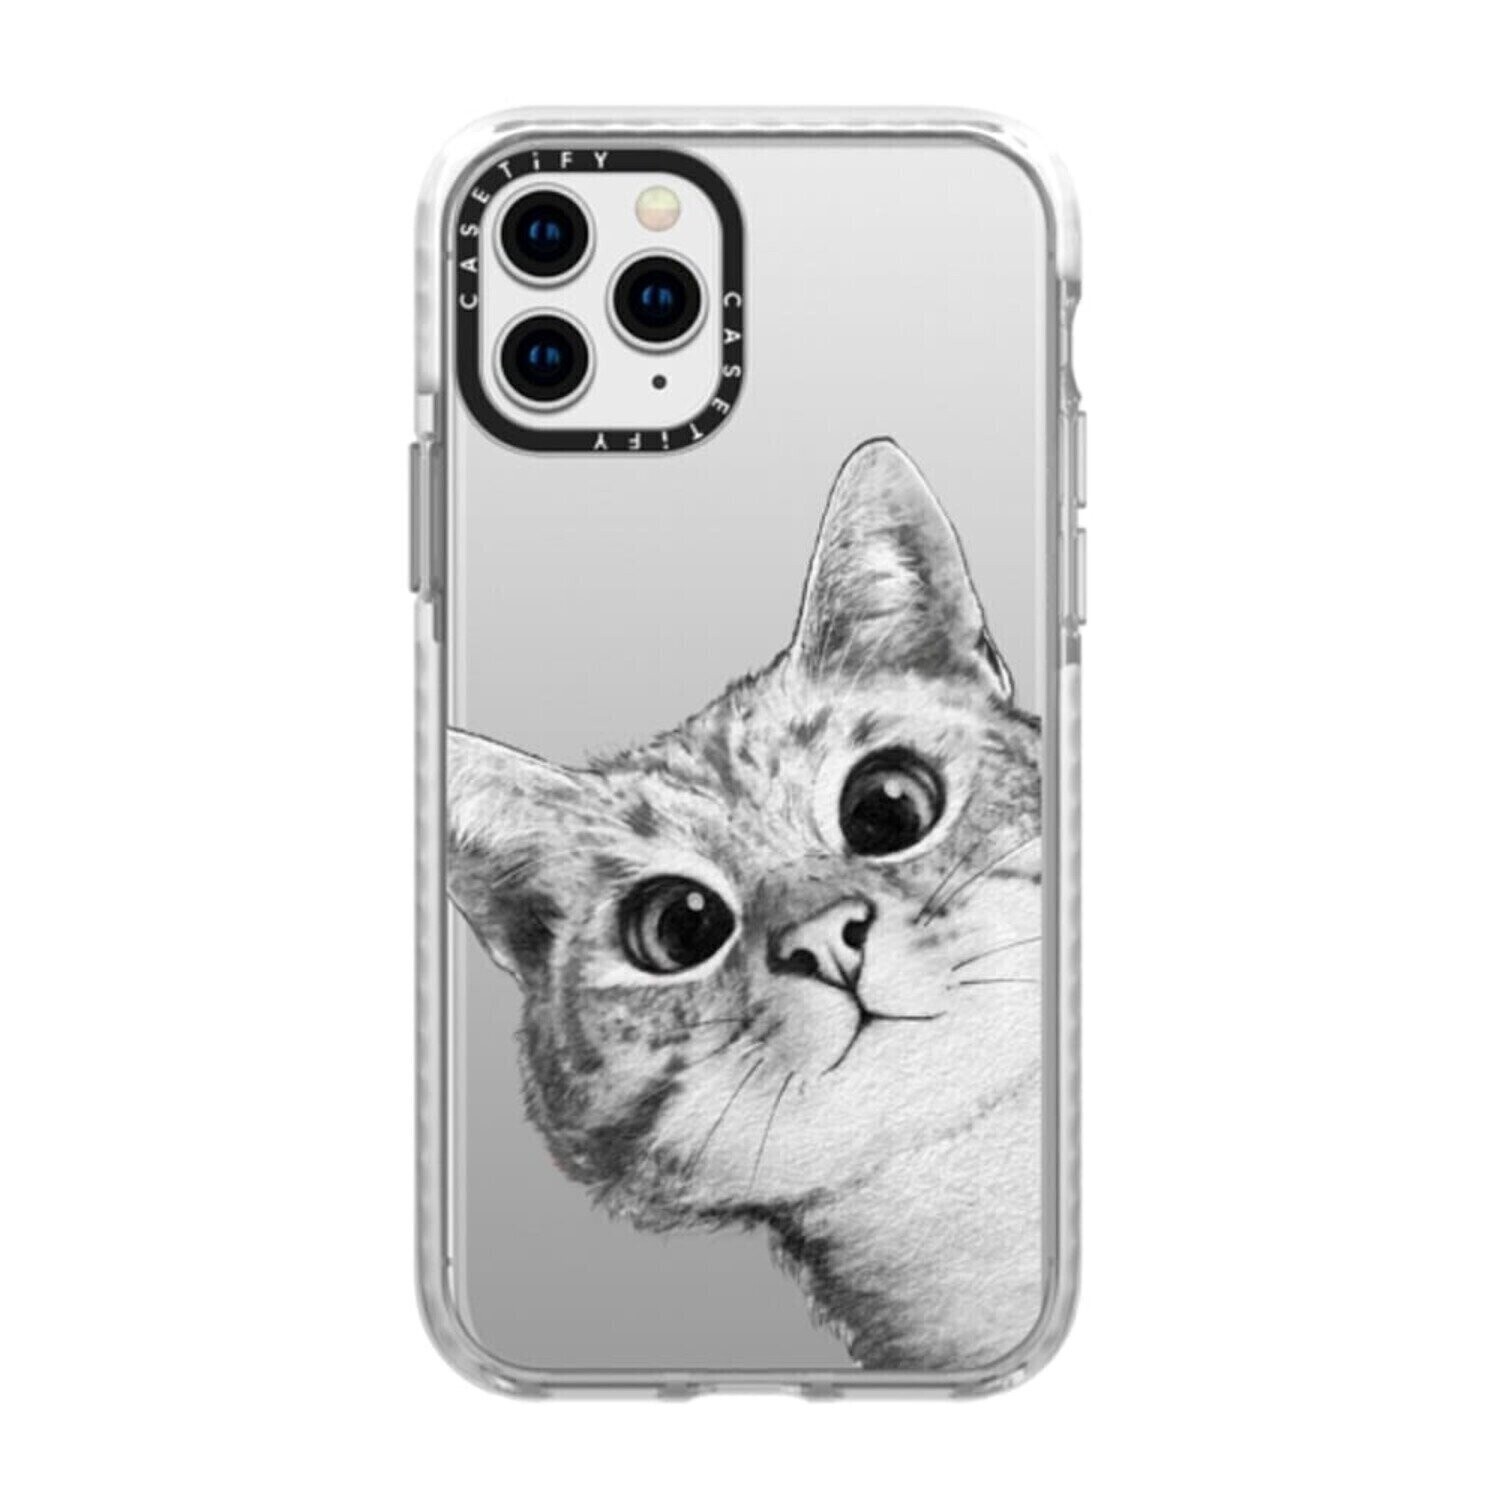 Casetify iPhone 11 Pro 5.8" Impact Case, Peekaboo Cat On Rose Gold